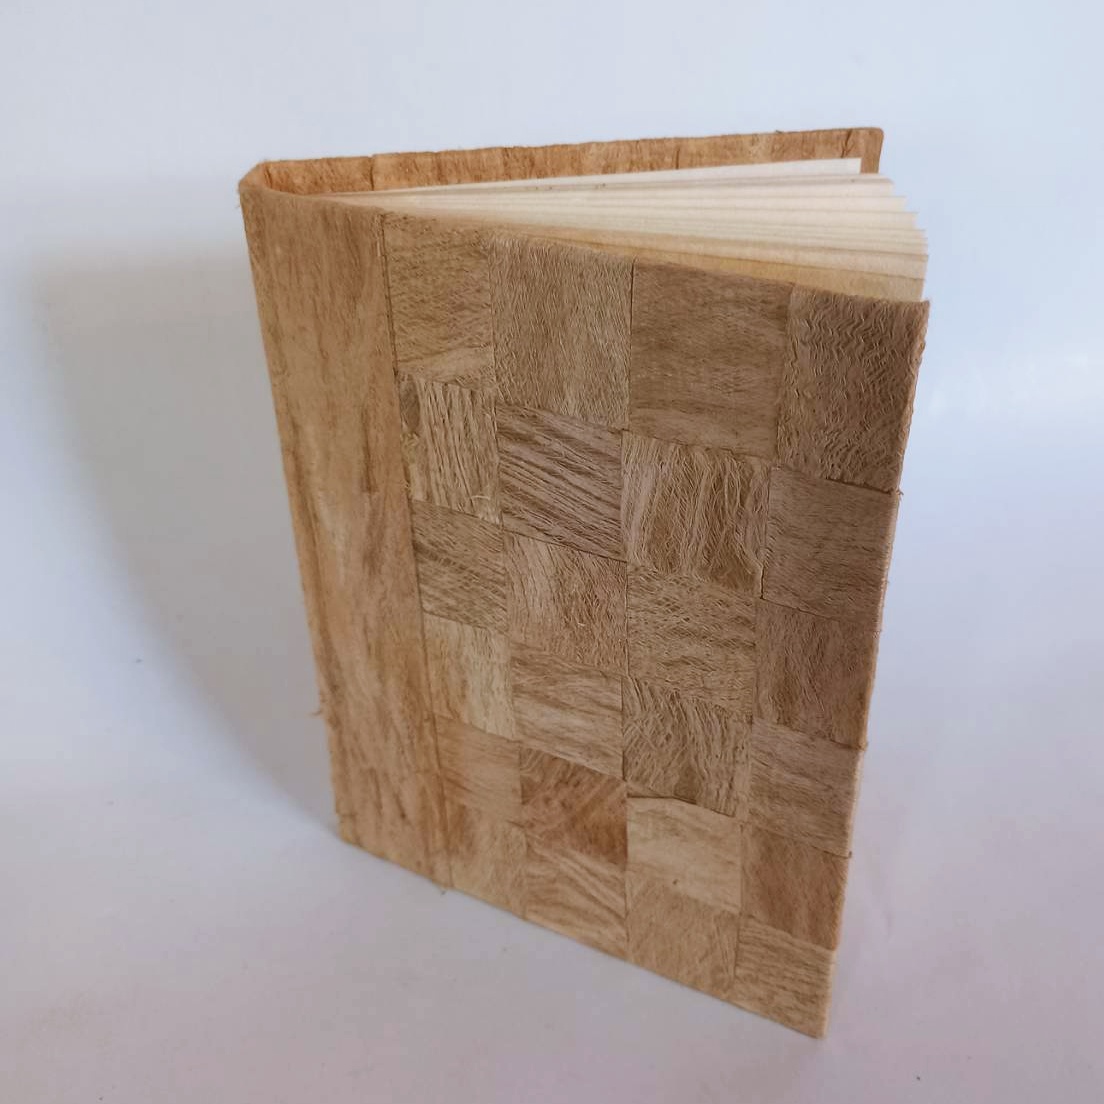 Mulberry paper notebook with bark fiber สมุดกระดาษสาแต่งเยื่อสาน้ำตาล